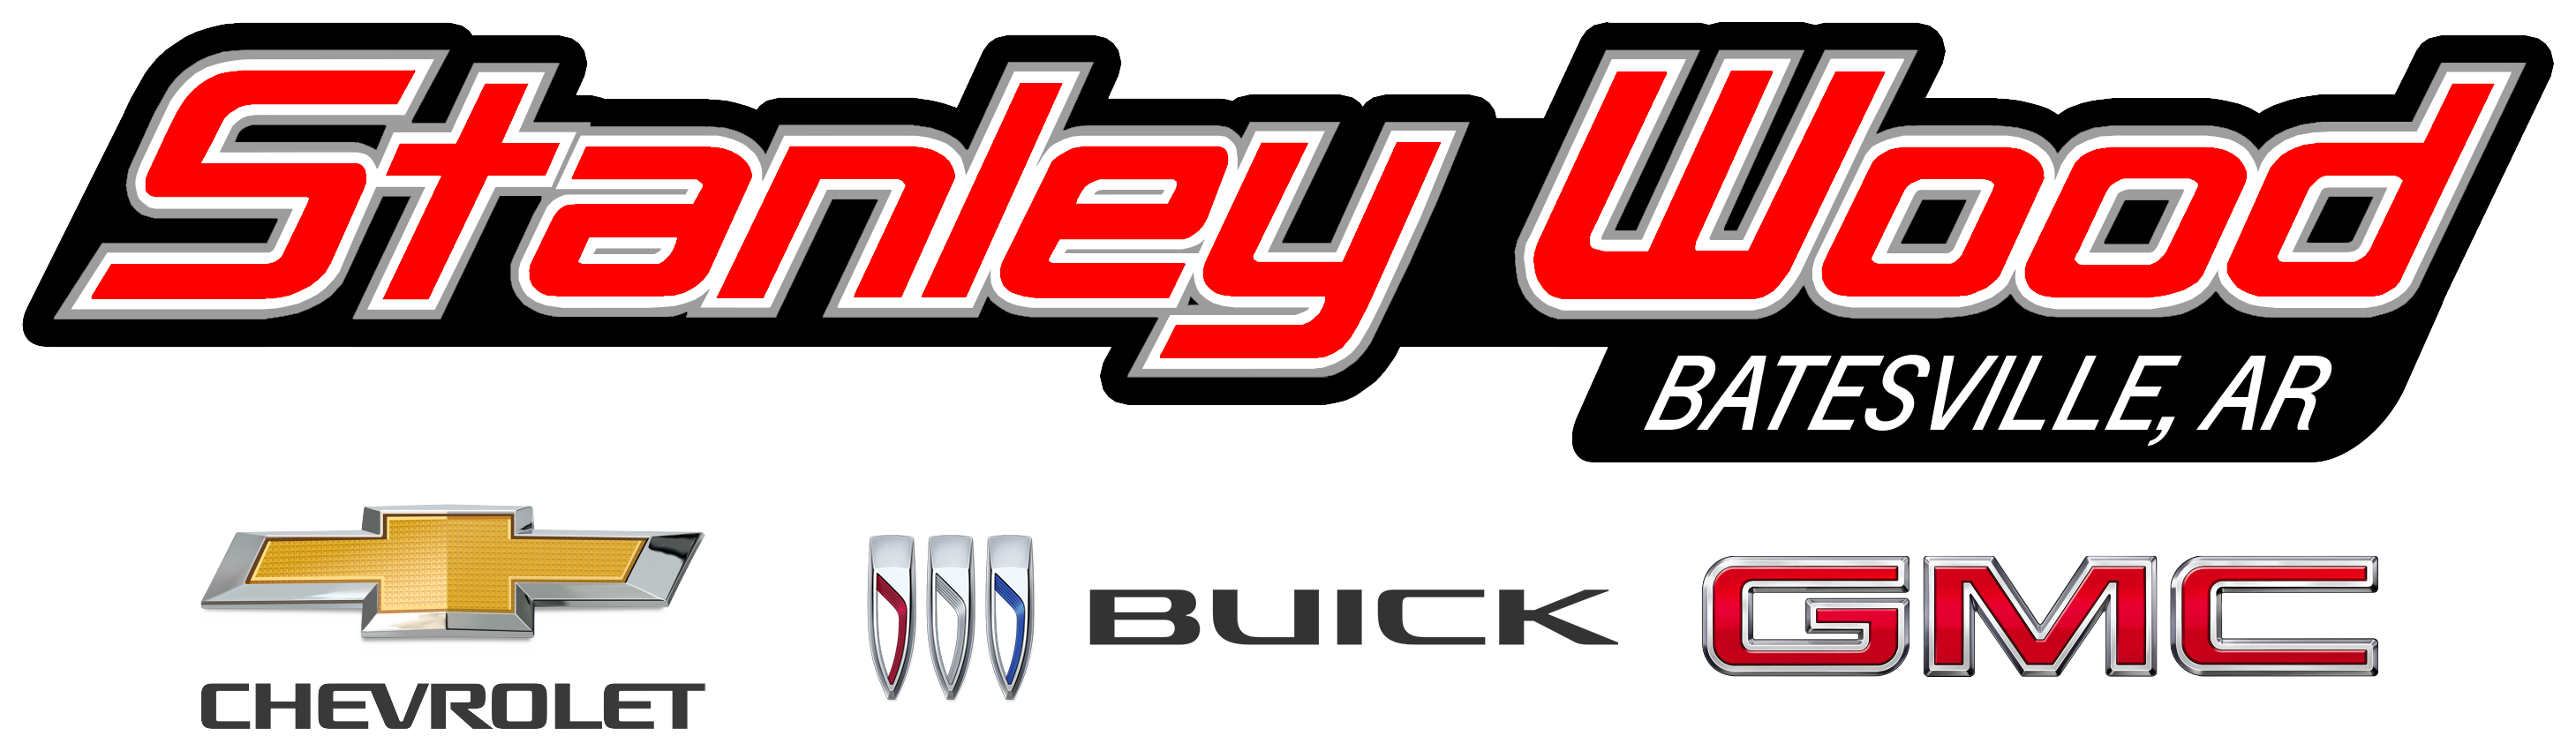 Stanley Wood Chevrolet Buick GMC in Batesville AR